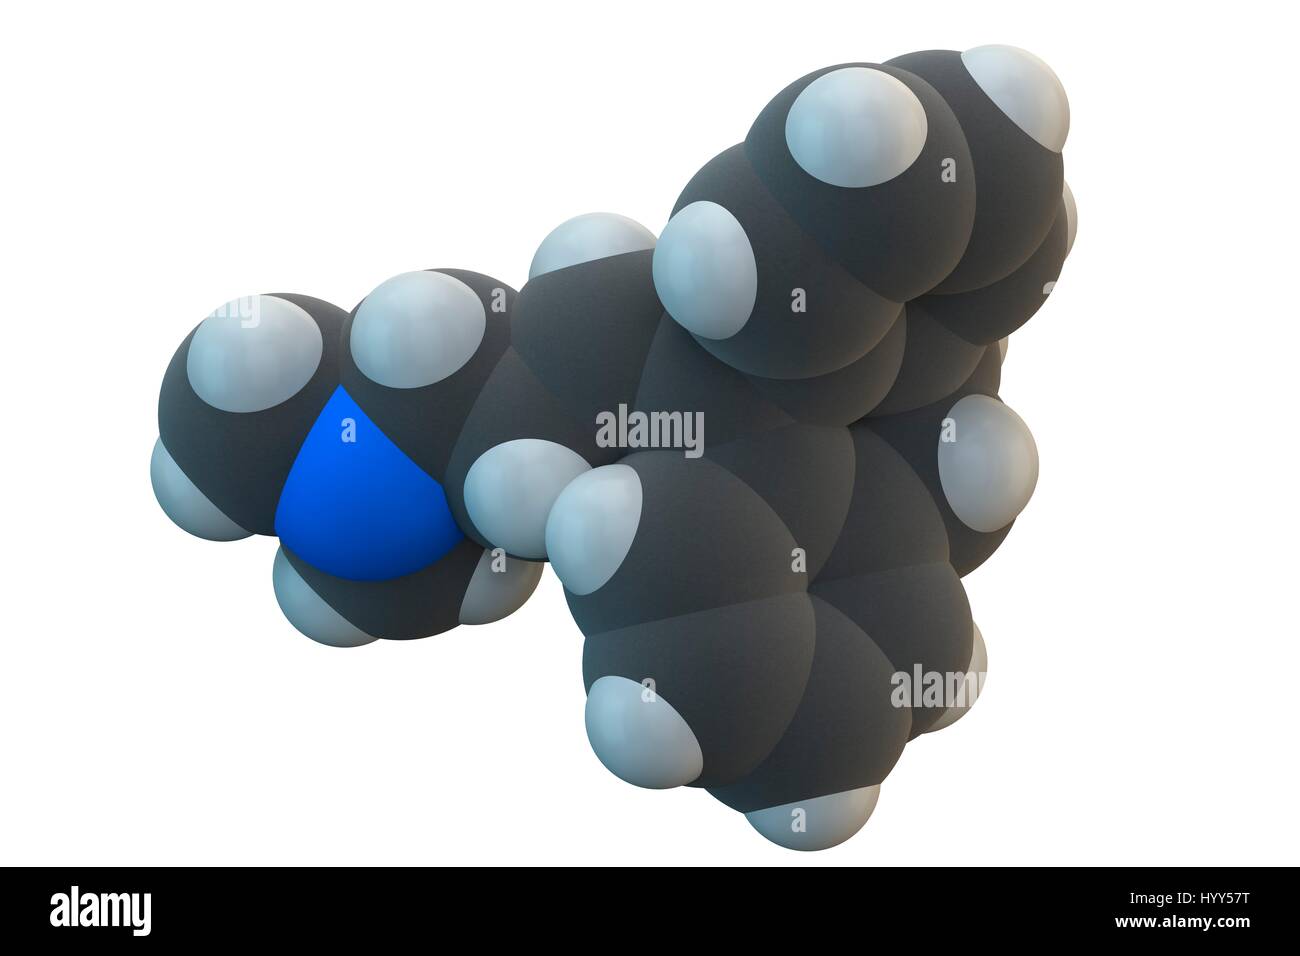 Amitriptyline. Molecular model of the antidepressant drug amitriptyline. Chemical formula is C20H23N. Atoms are represented as spheres: carbon (grey), hydrogen (white), nitrogen (blue). Illustration. Stock Photo